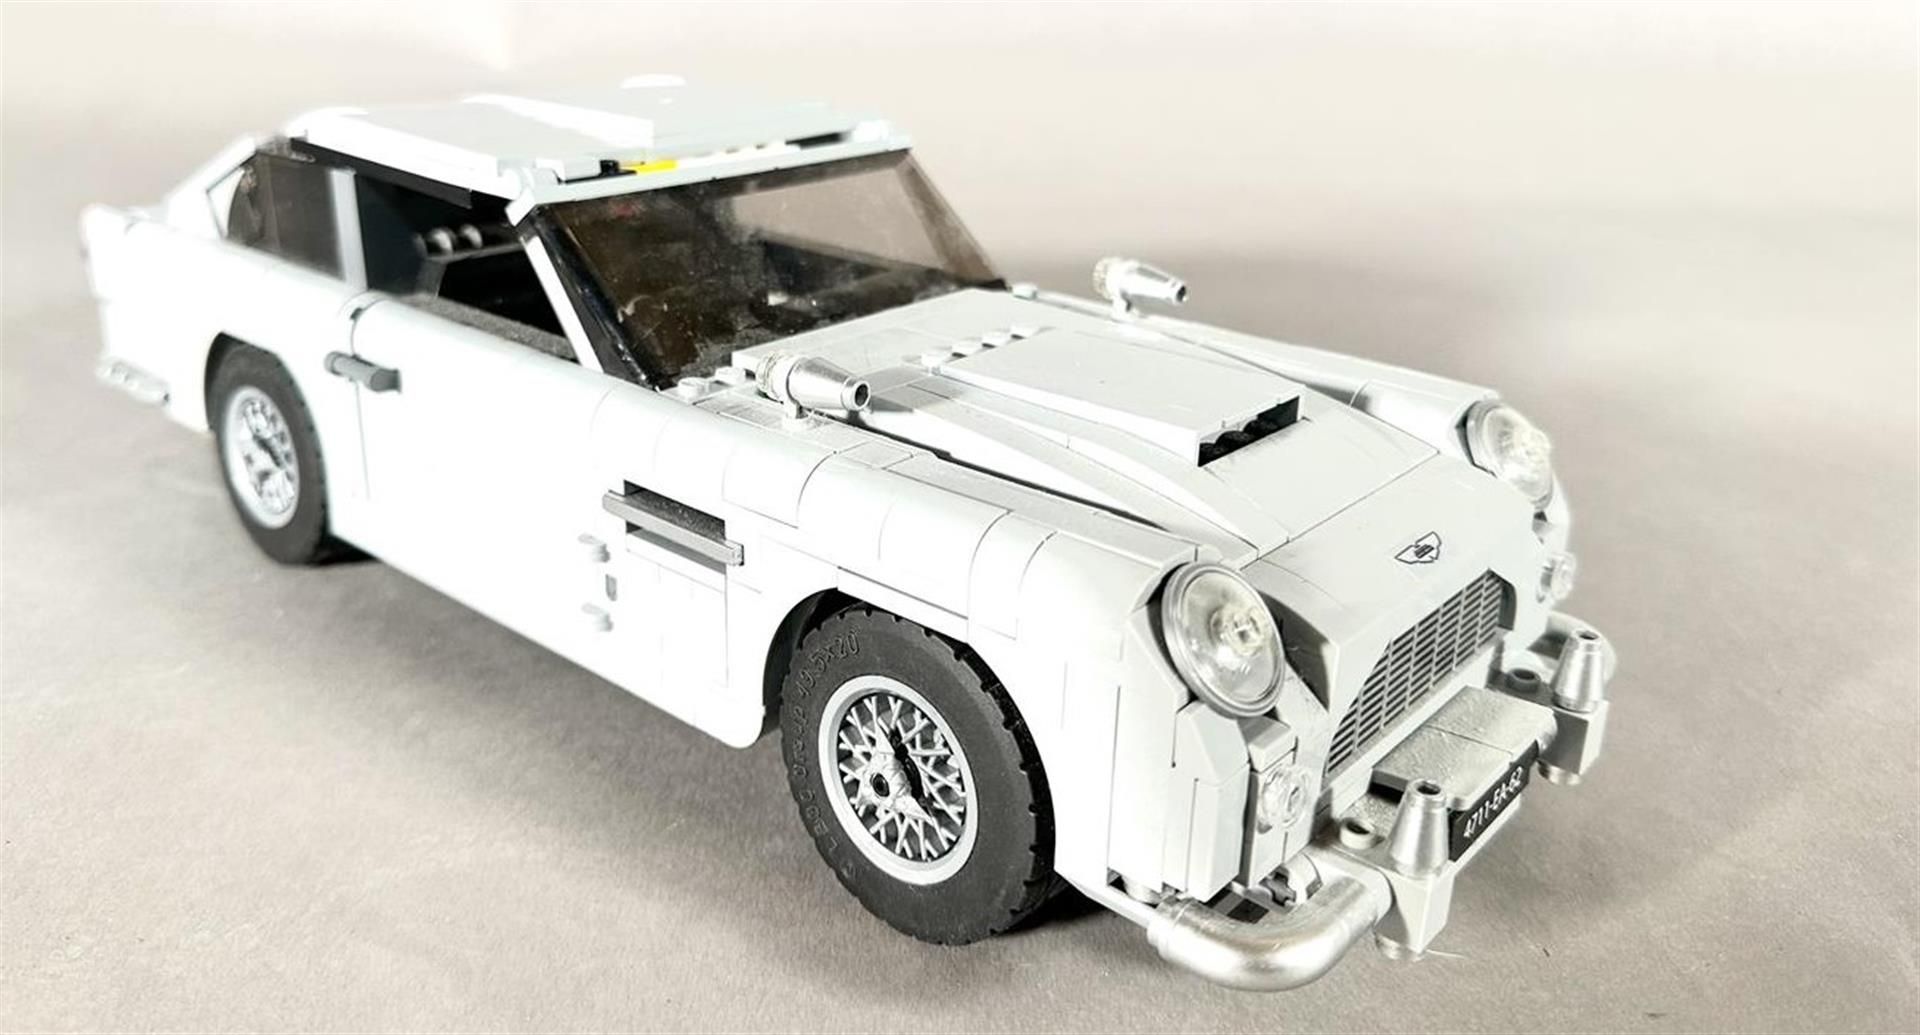 Lego - Creator Expert - 10262 - Car James Bond Aston Martin DB5 - 2000 - present. - Image 2 of 7